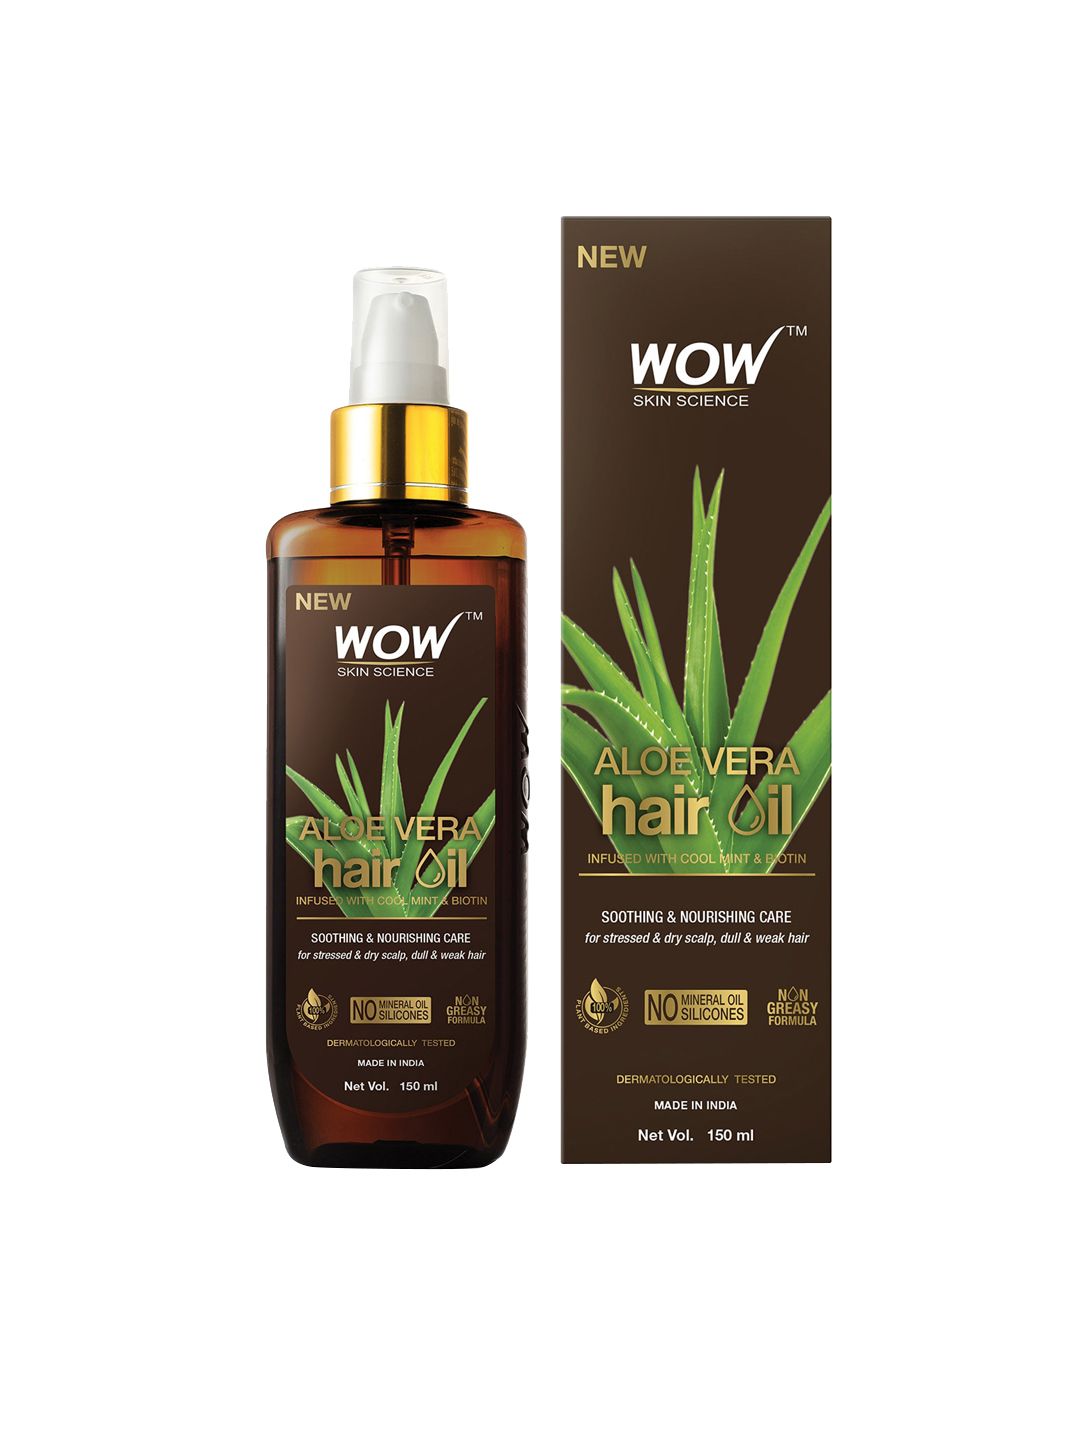 WOW SKIN SCIENCE Aloe Vera Hair Oil with Cool Mint & Biotin - 150 ml Price in India